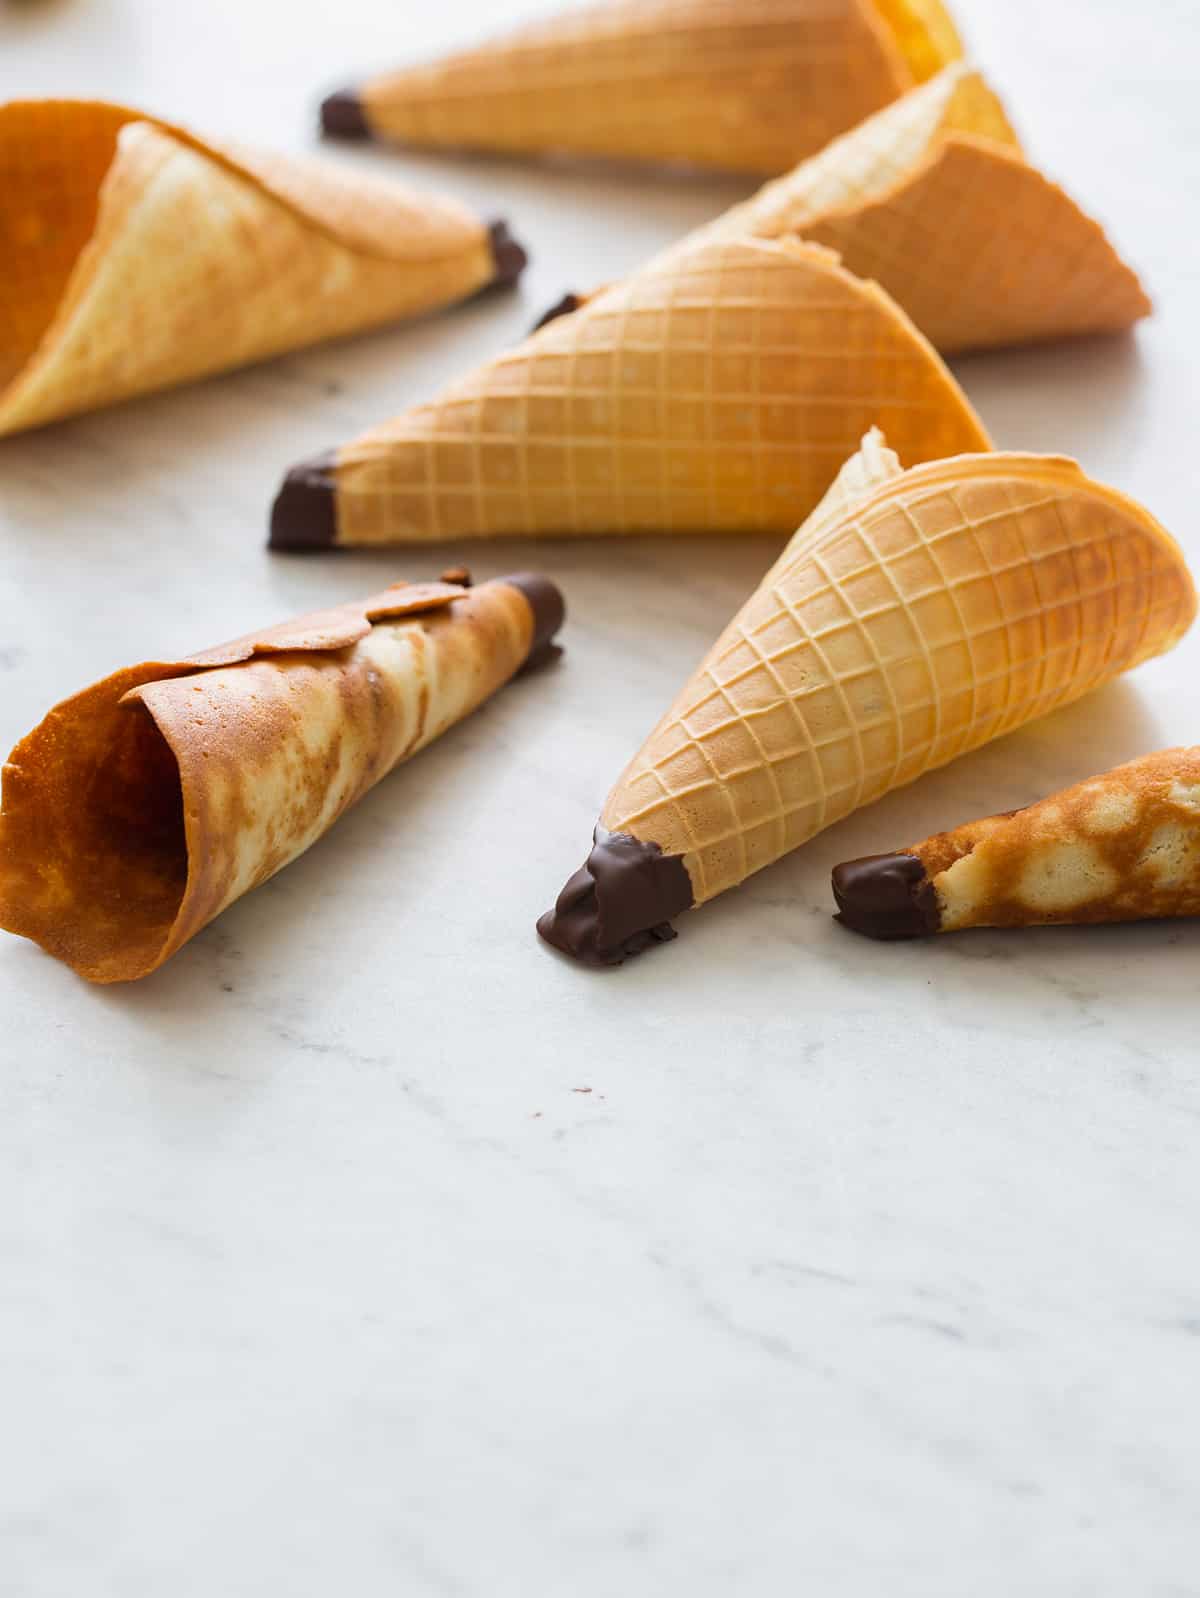 https://www.spoonforkbacon.com/wp-content/uploads/2013/08/homemade-ice-cream-cones1-1.jpg